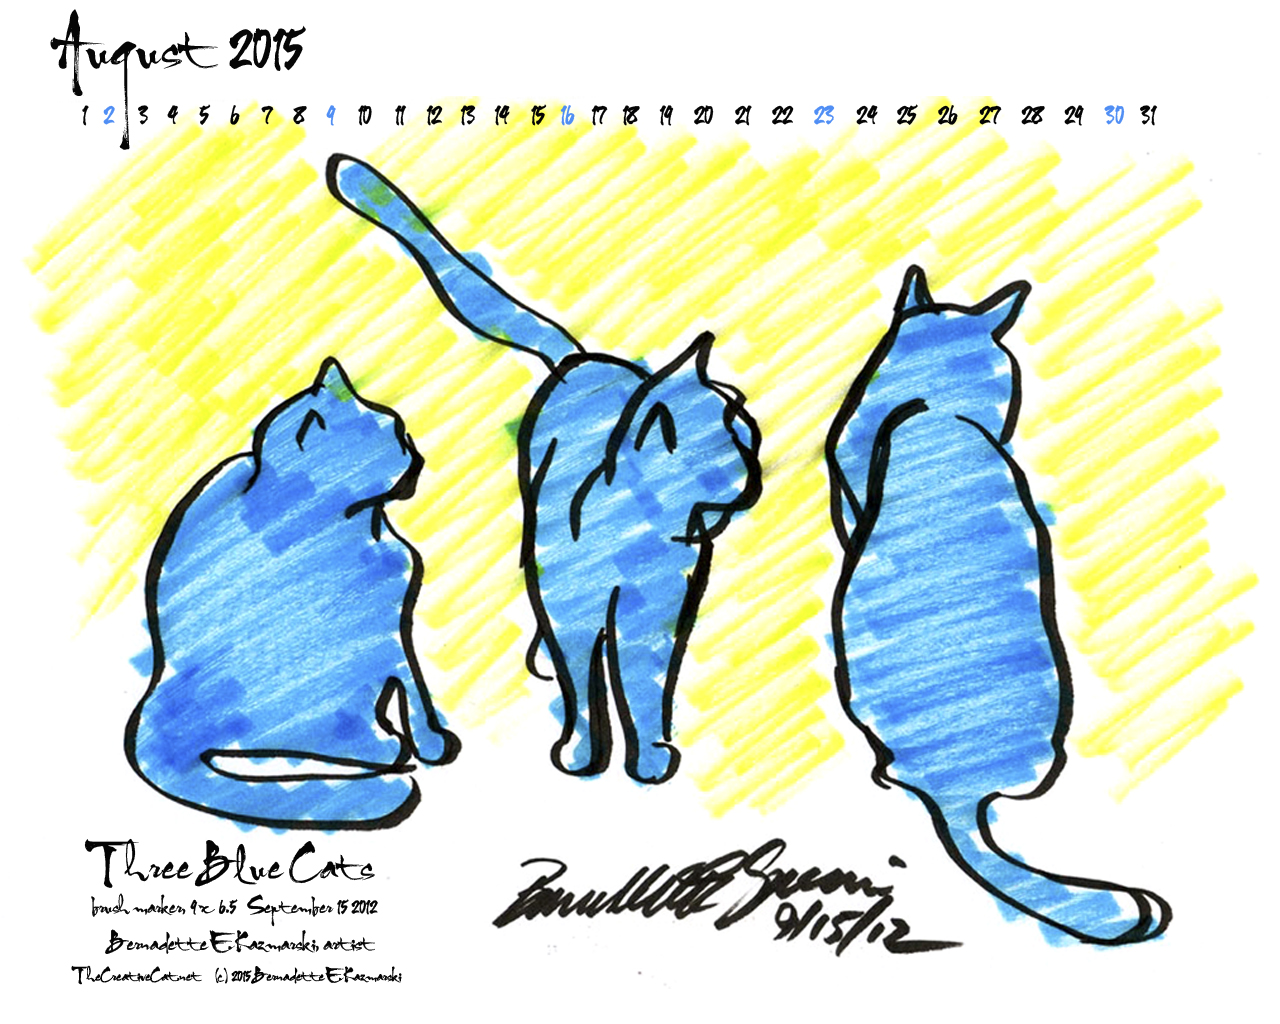 "Three Blue Cats" desktop calendar, 1280 x 1024 for square and laptop monitors.